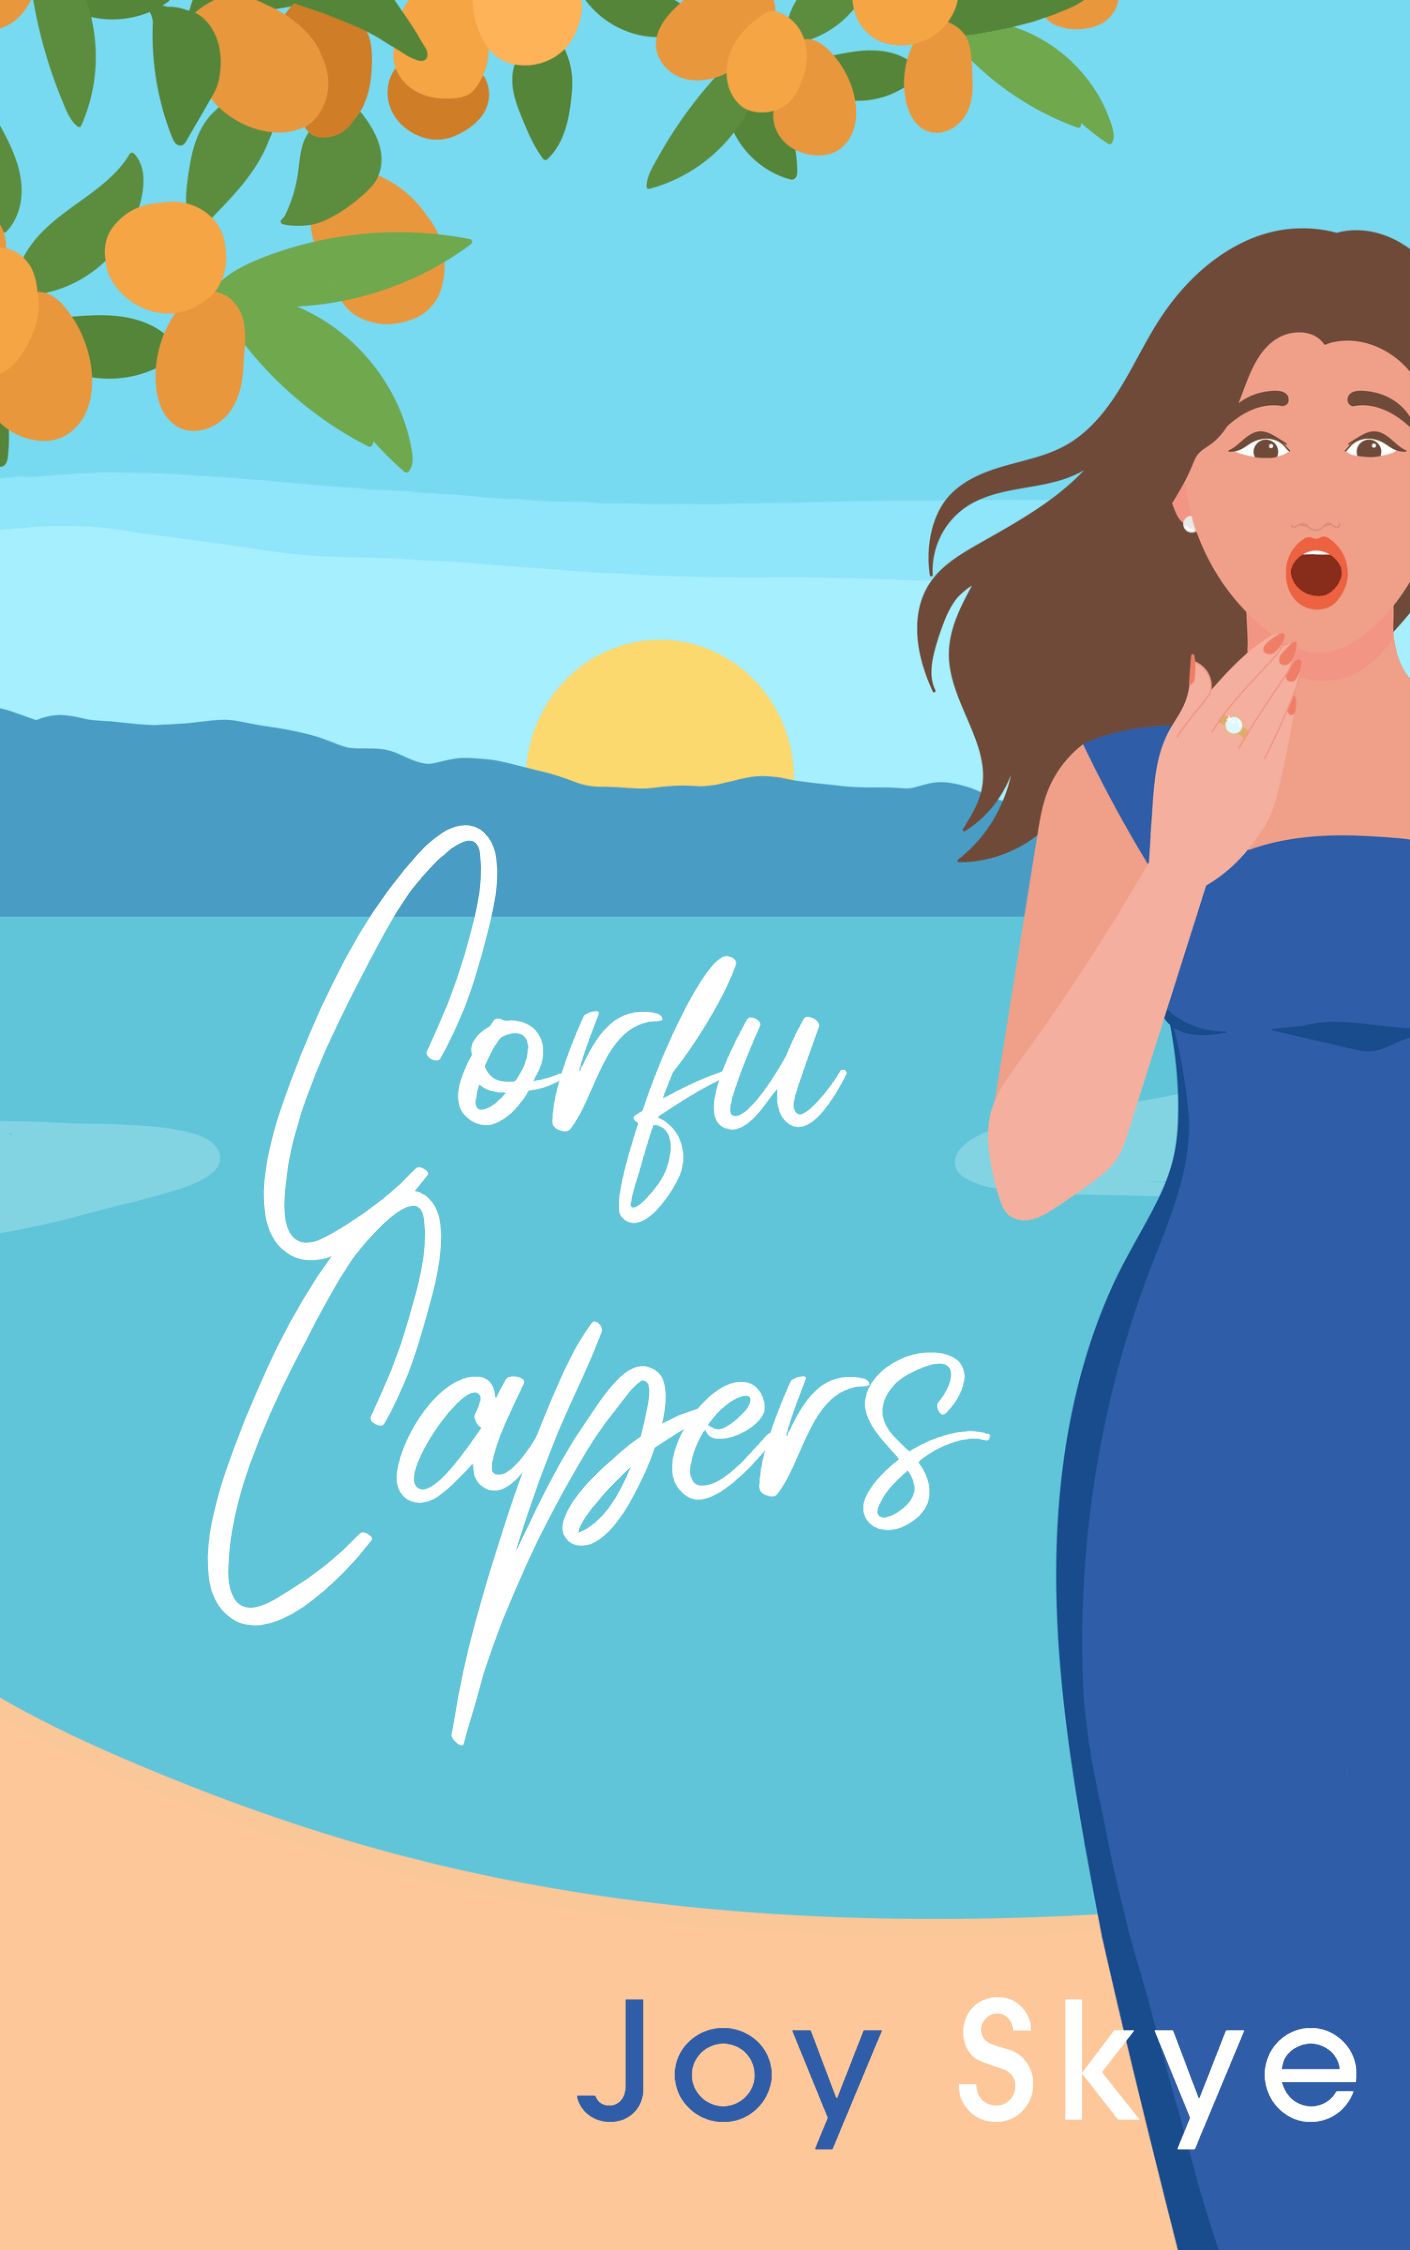 FREE: Corfu Capers by Joy Skye